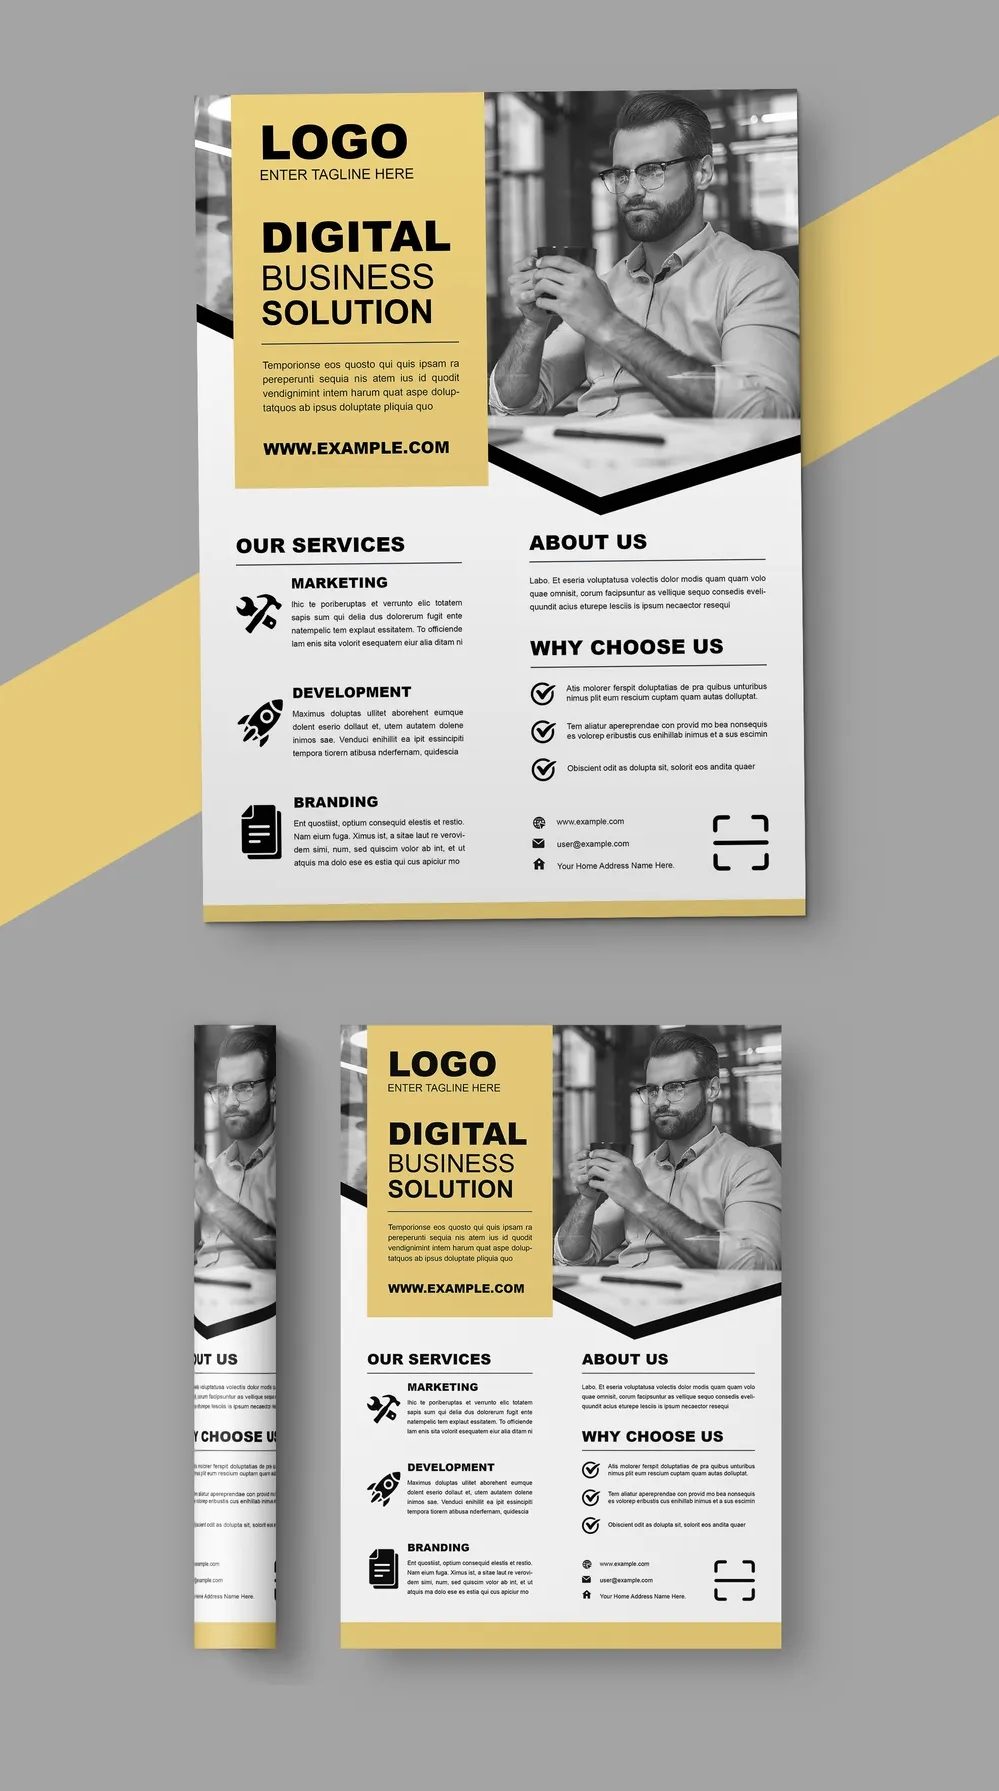 Adobestock - Business Flyer Design Template 721820130